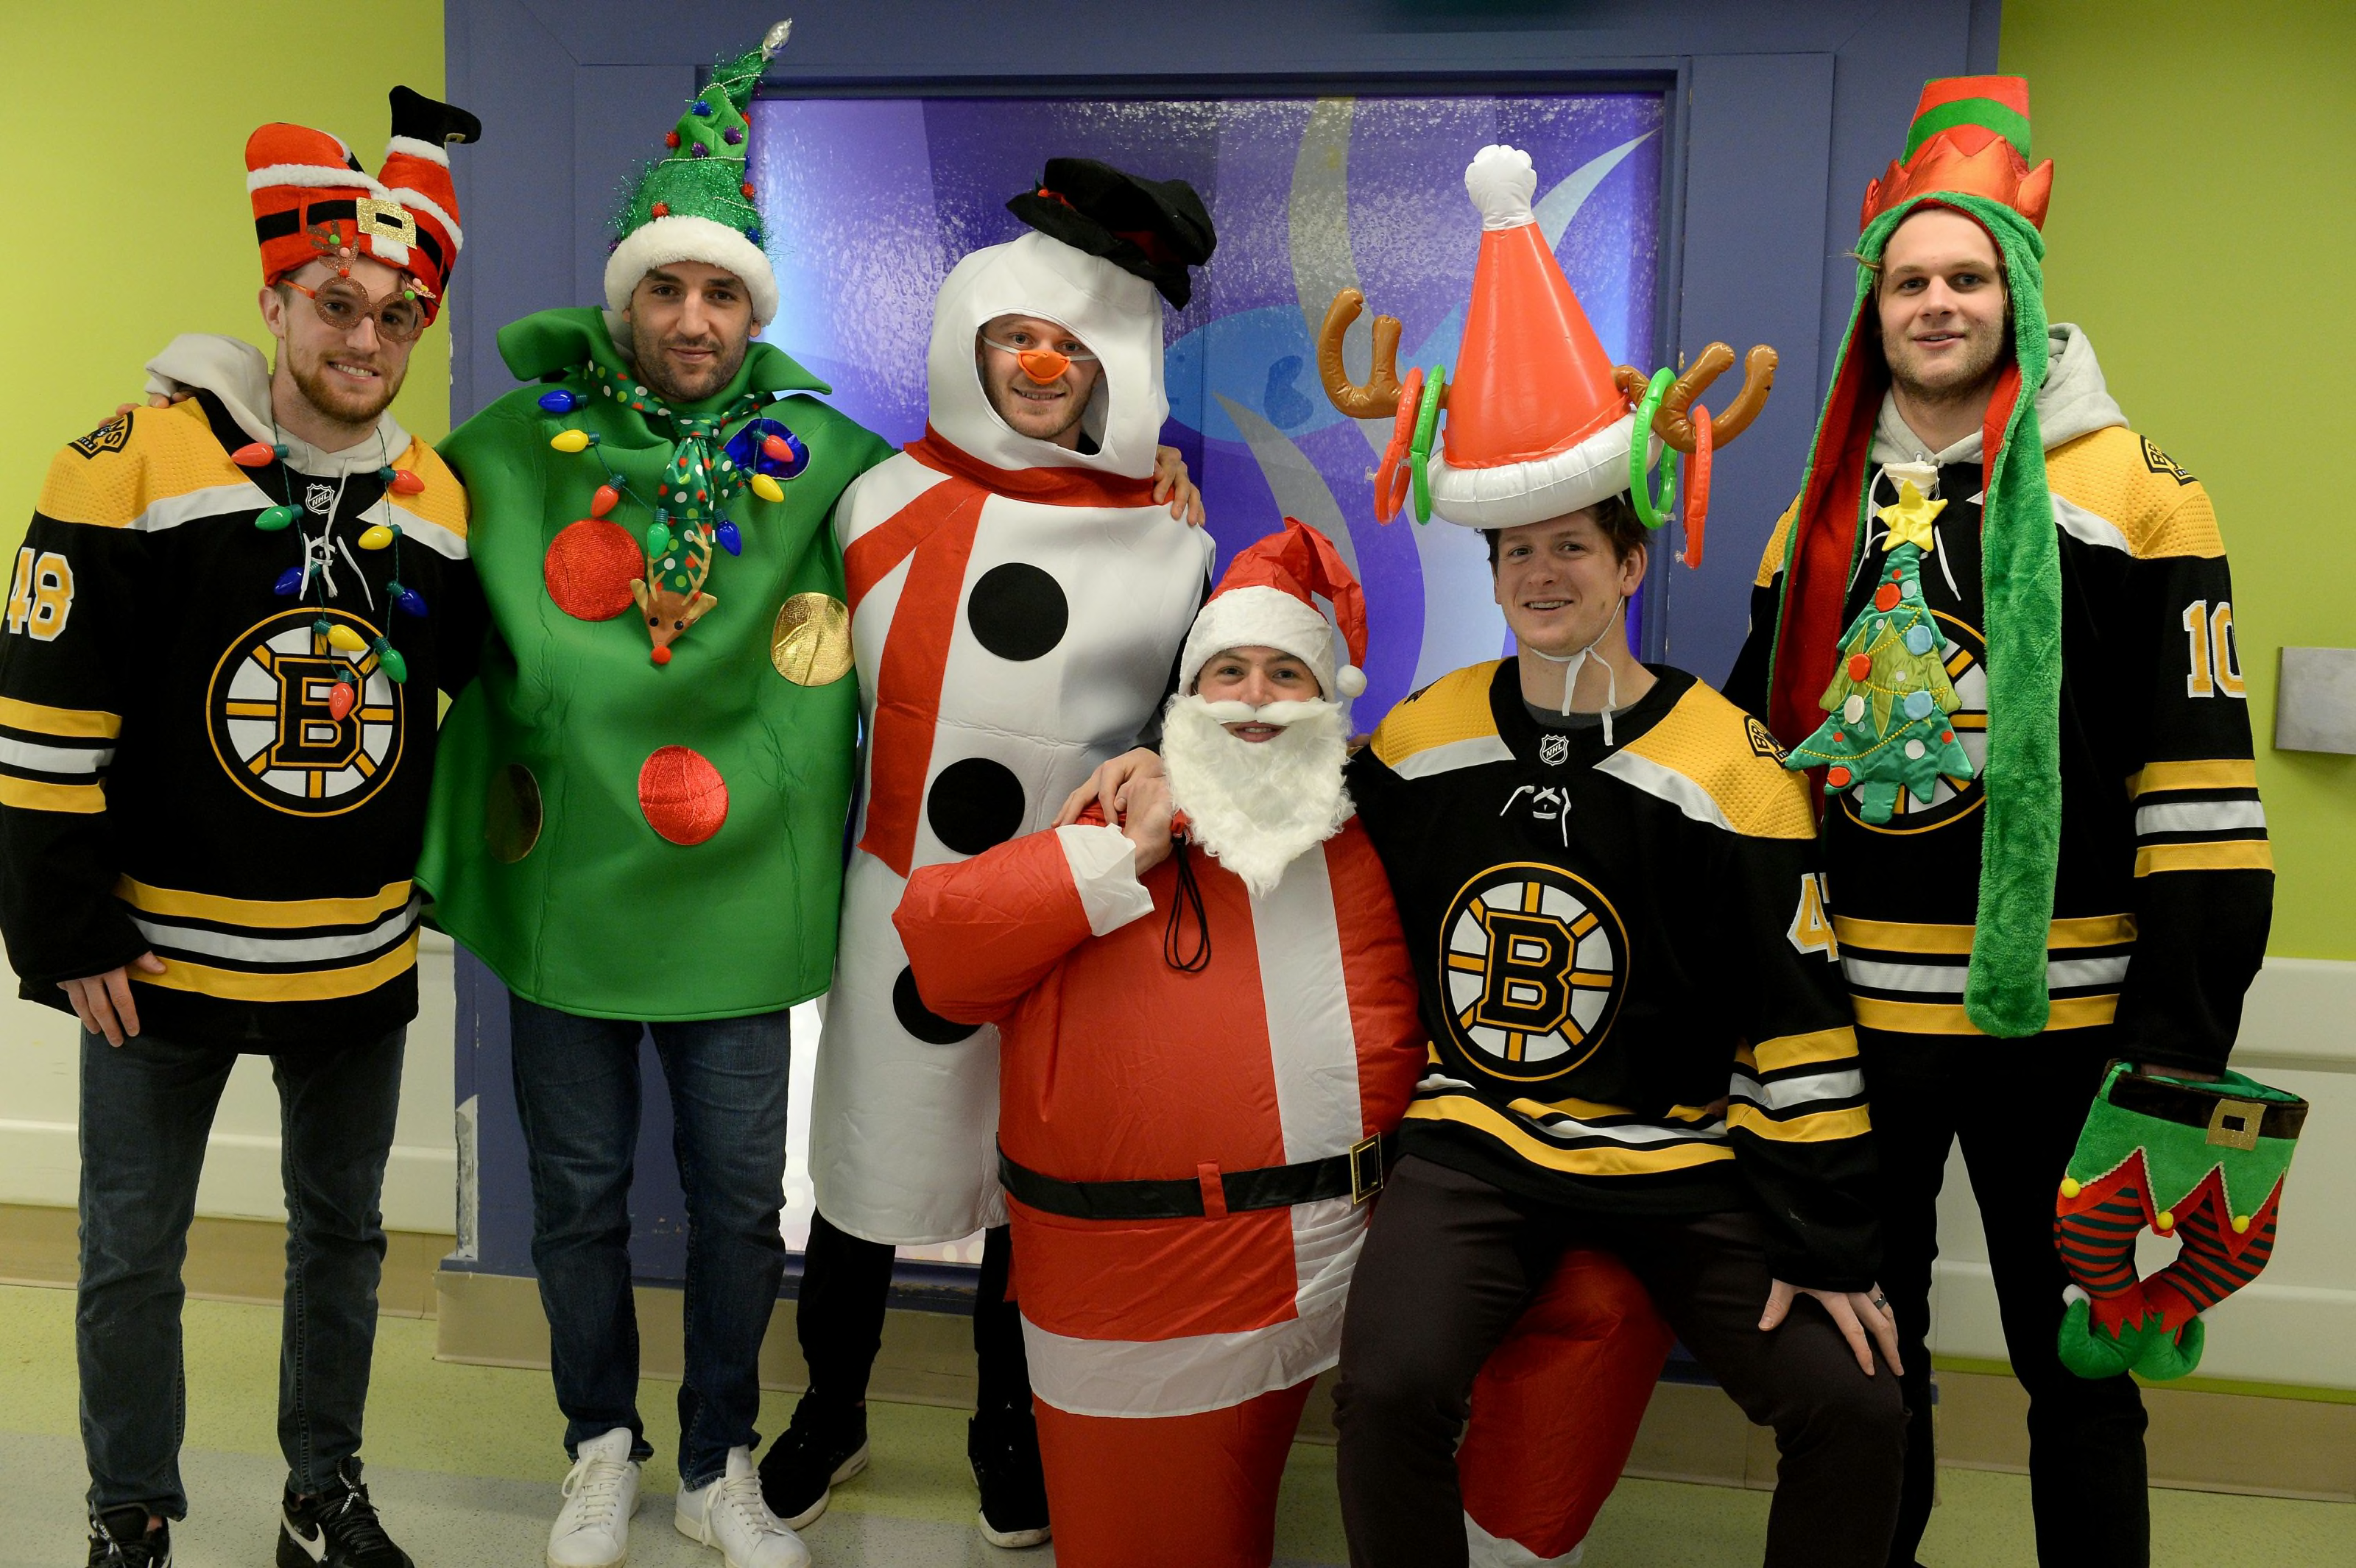 Bruins' shopping spree helps spread holiday cheer – Boston Herald